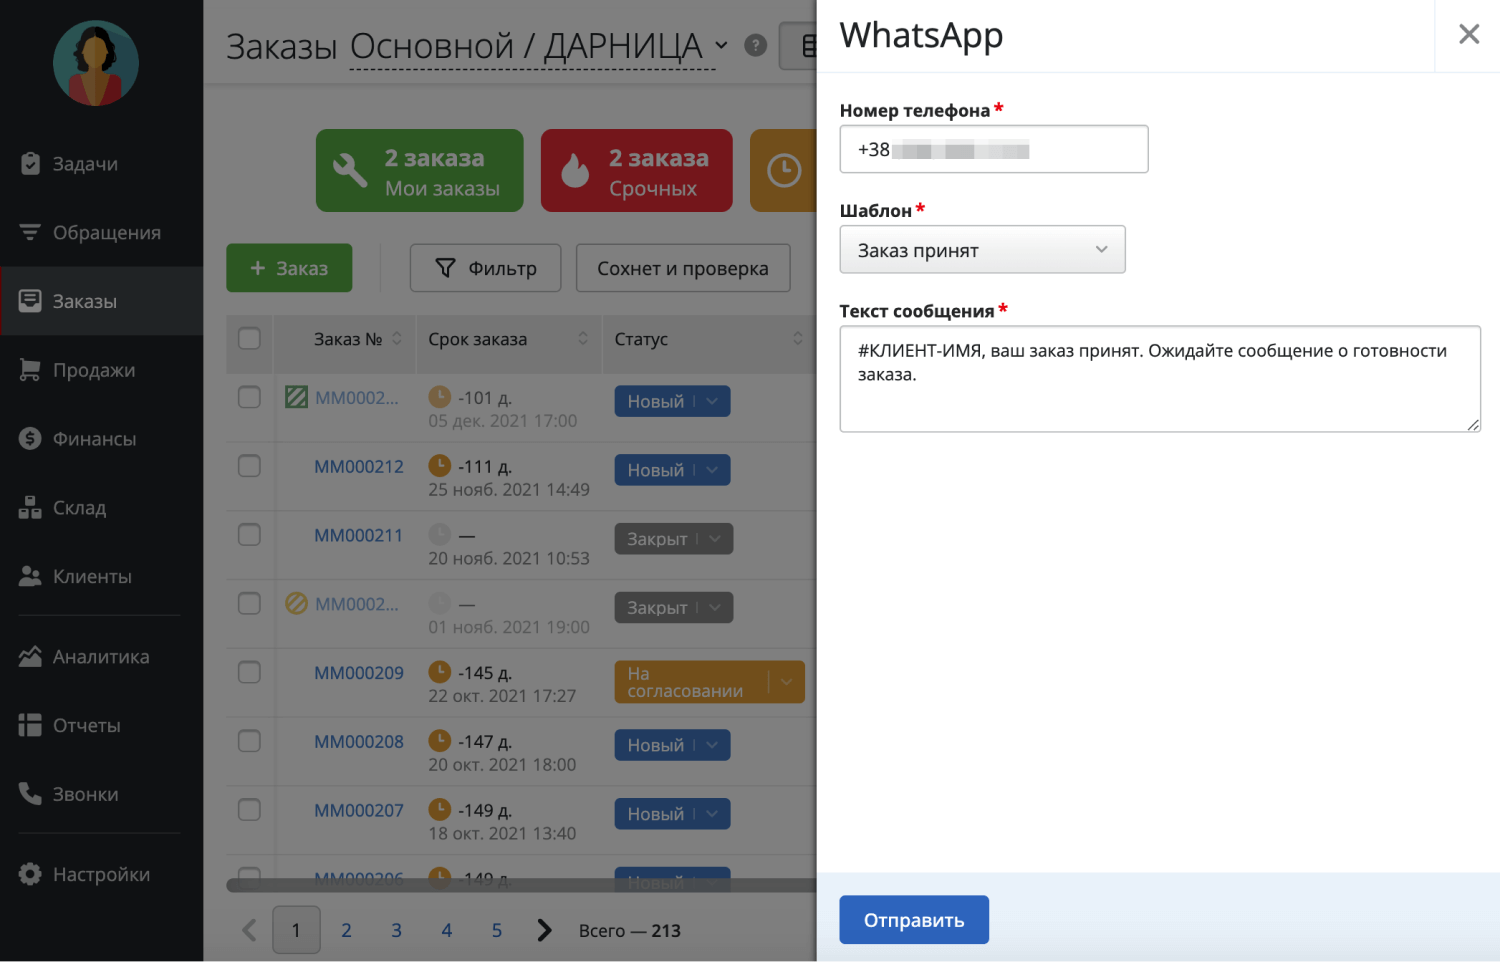 whatsapp-dialogue.png (71 KB)